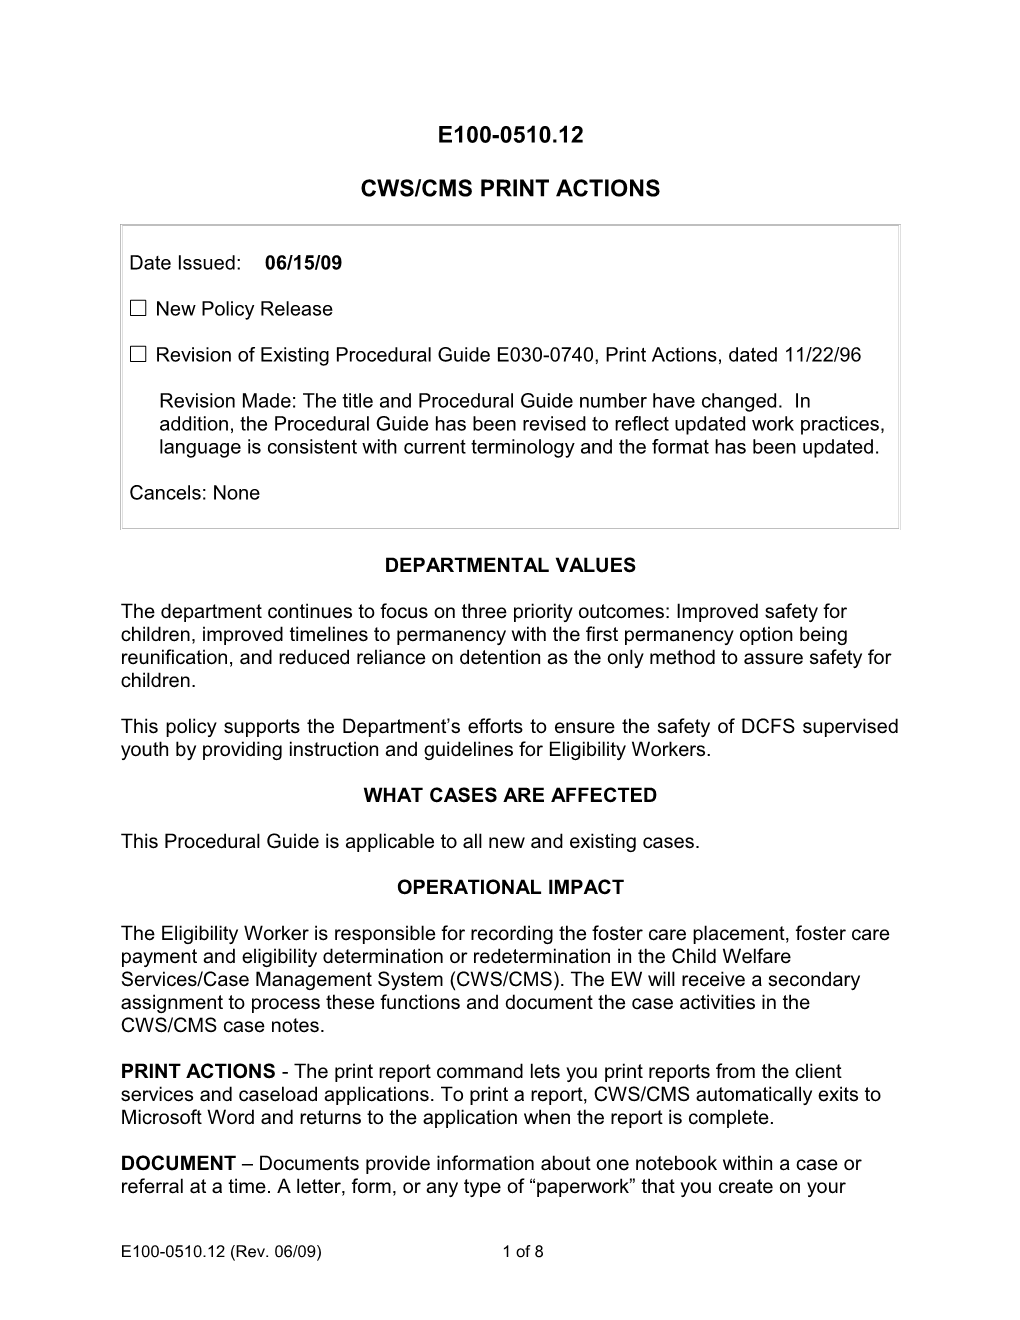 E0100-0510.12, CWS/CMS Print Actions